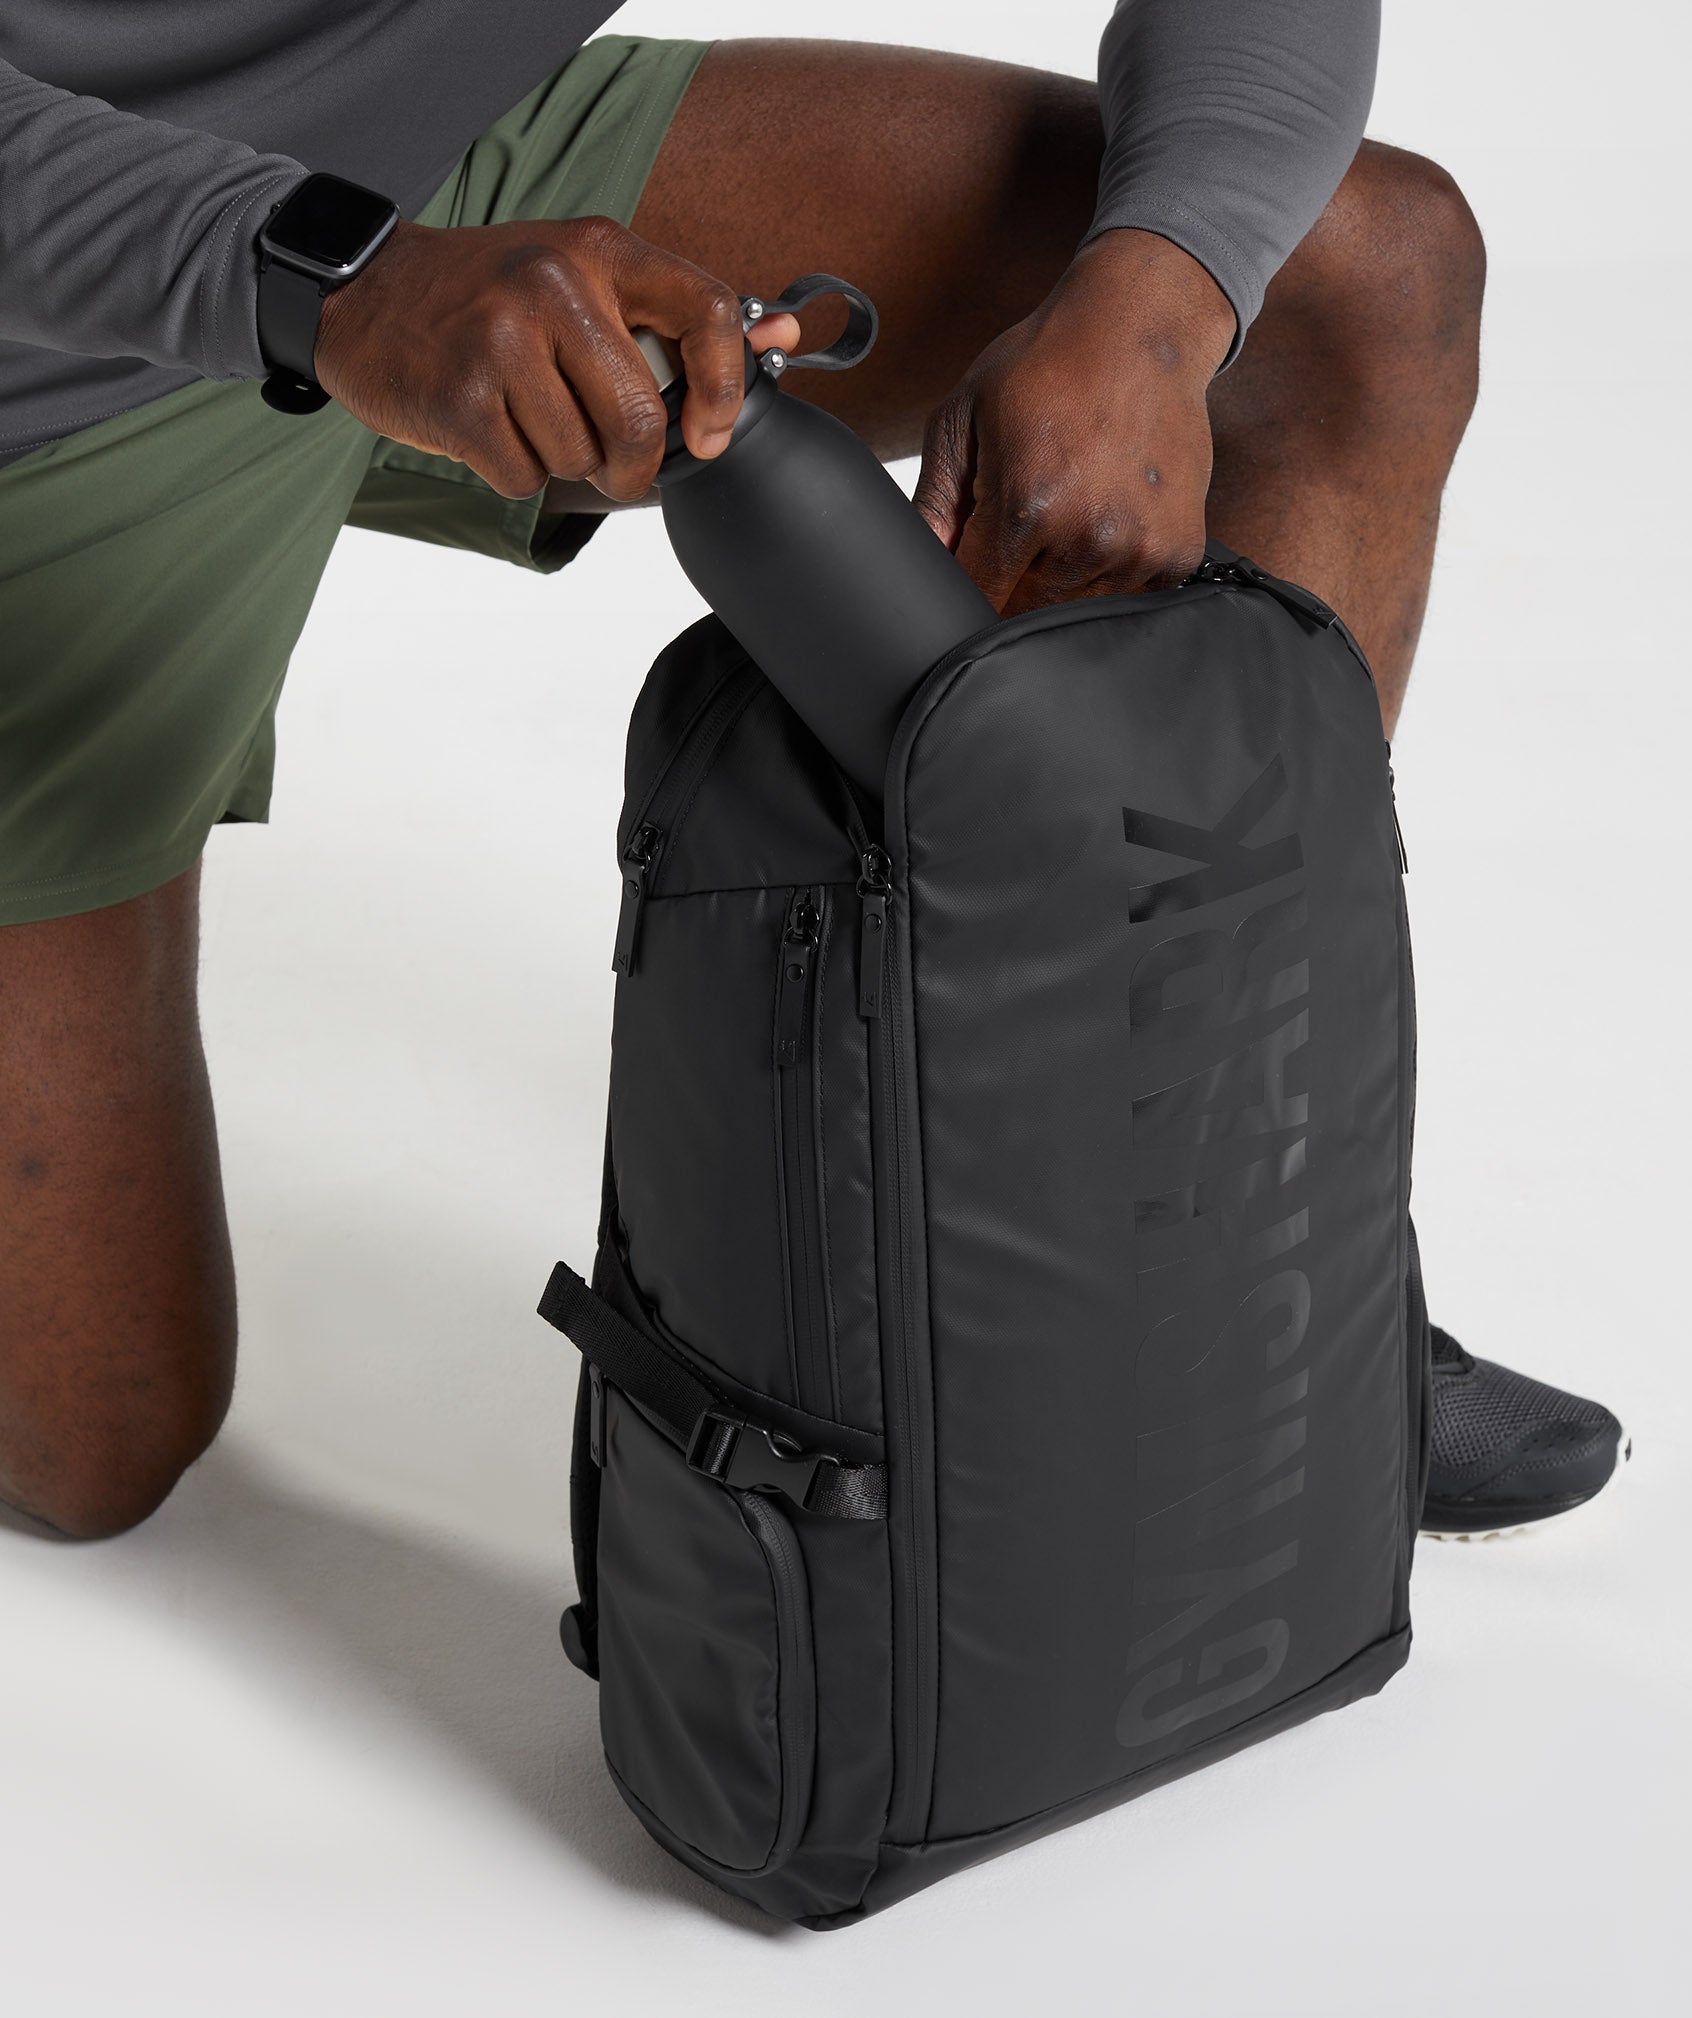 X-Series 0.3 Backpack in Black - view 3